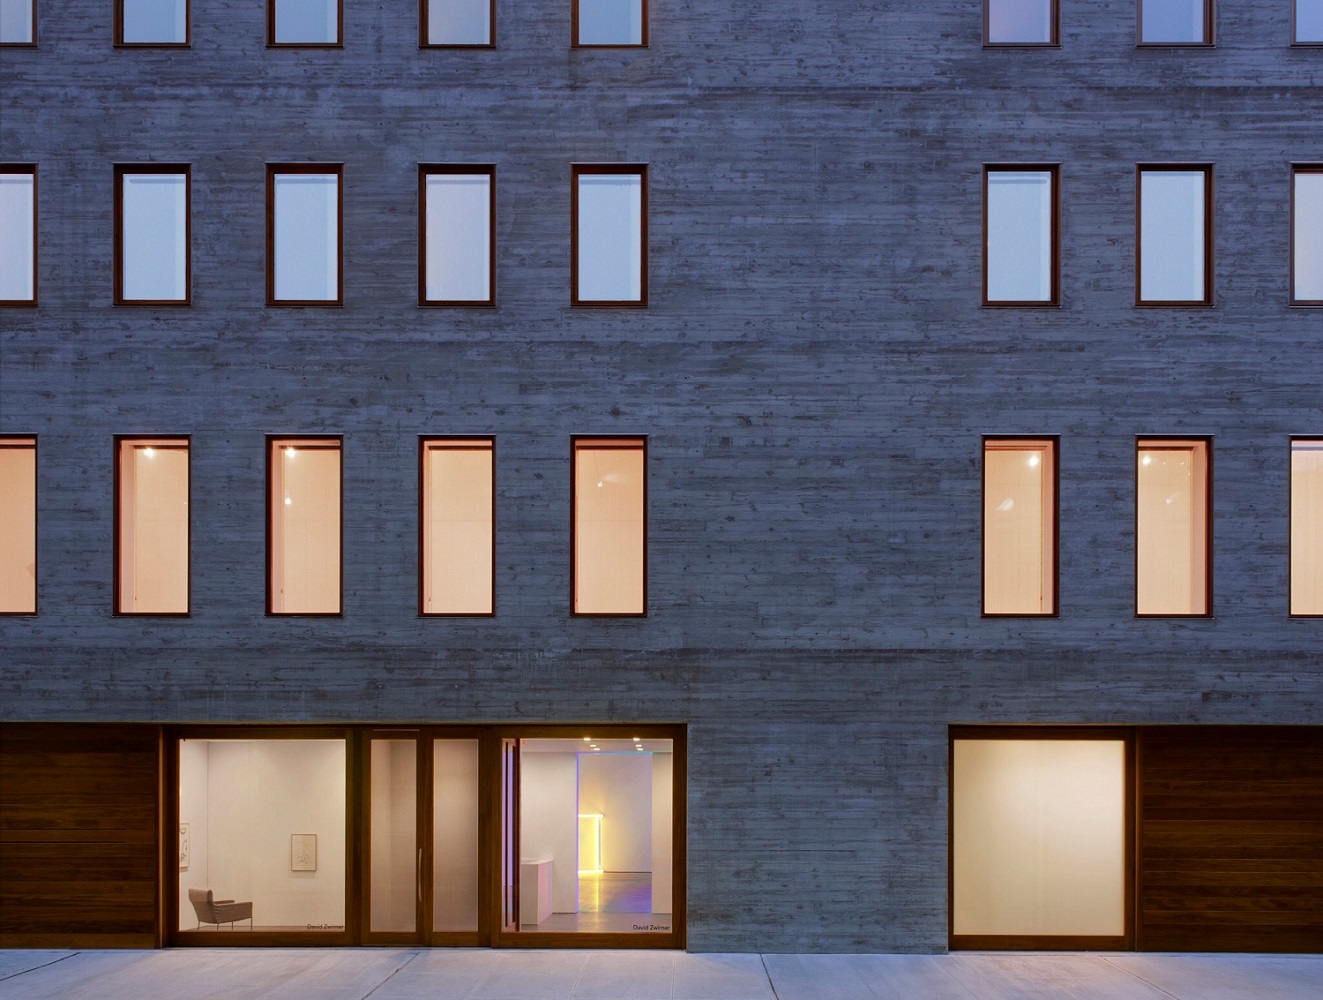 Image: Selldorf Architects